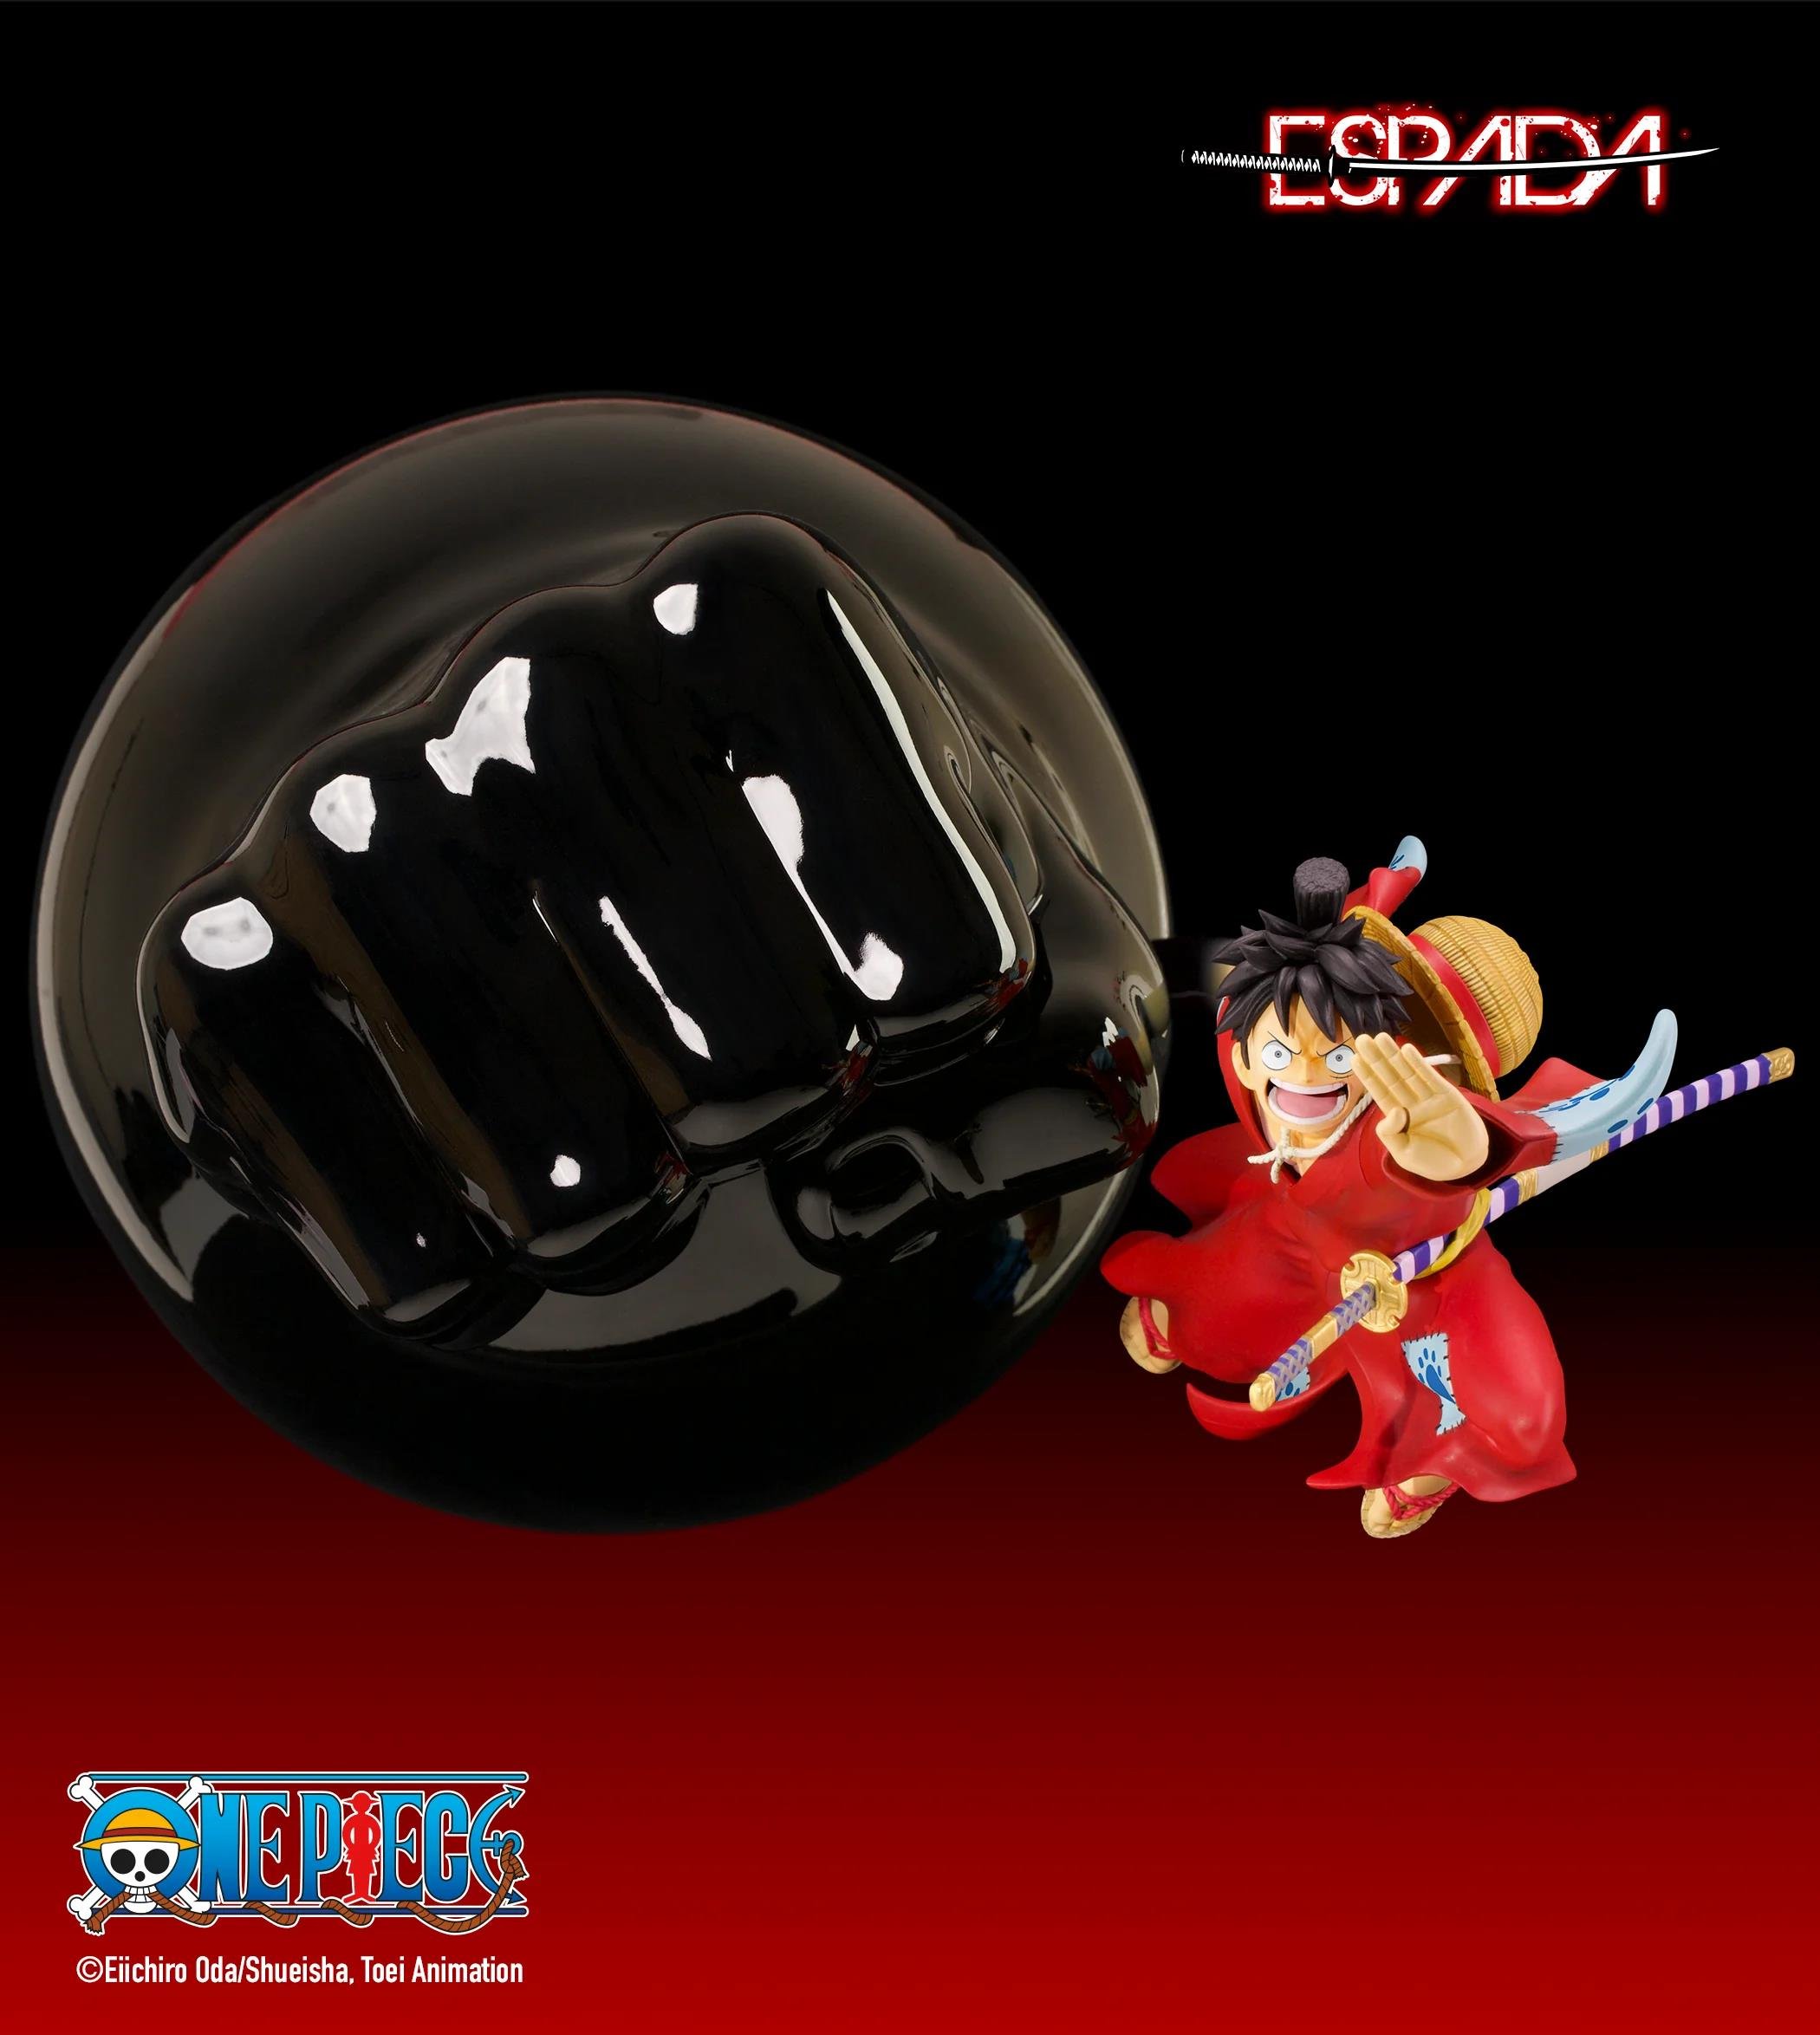 Double fist - Luffy Sun God Gear 5 action figure 28cm [IN STOCK]